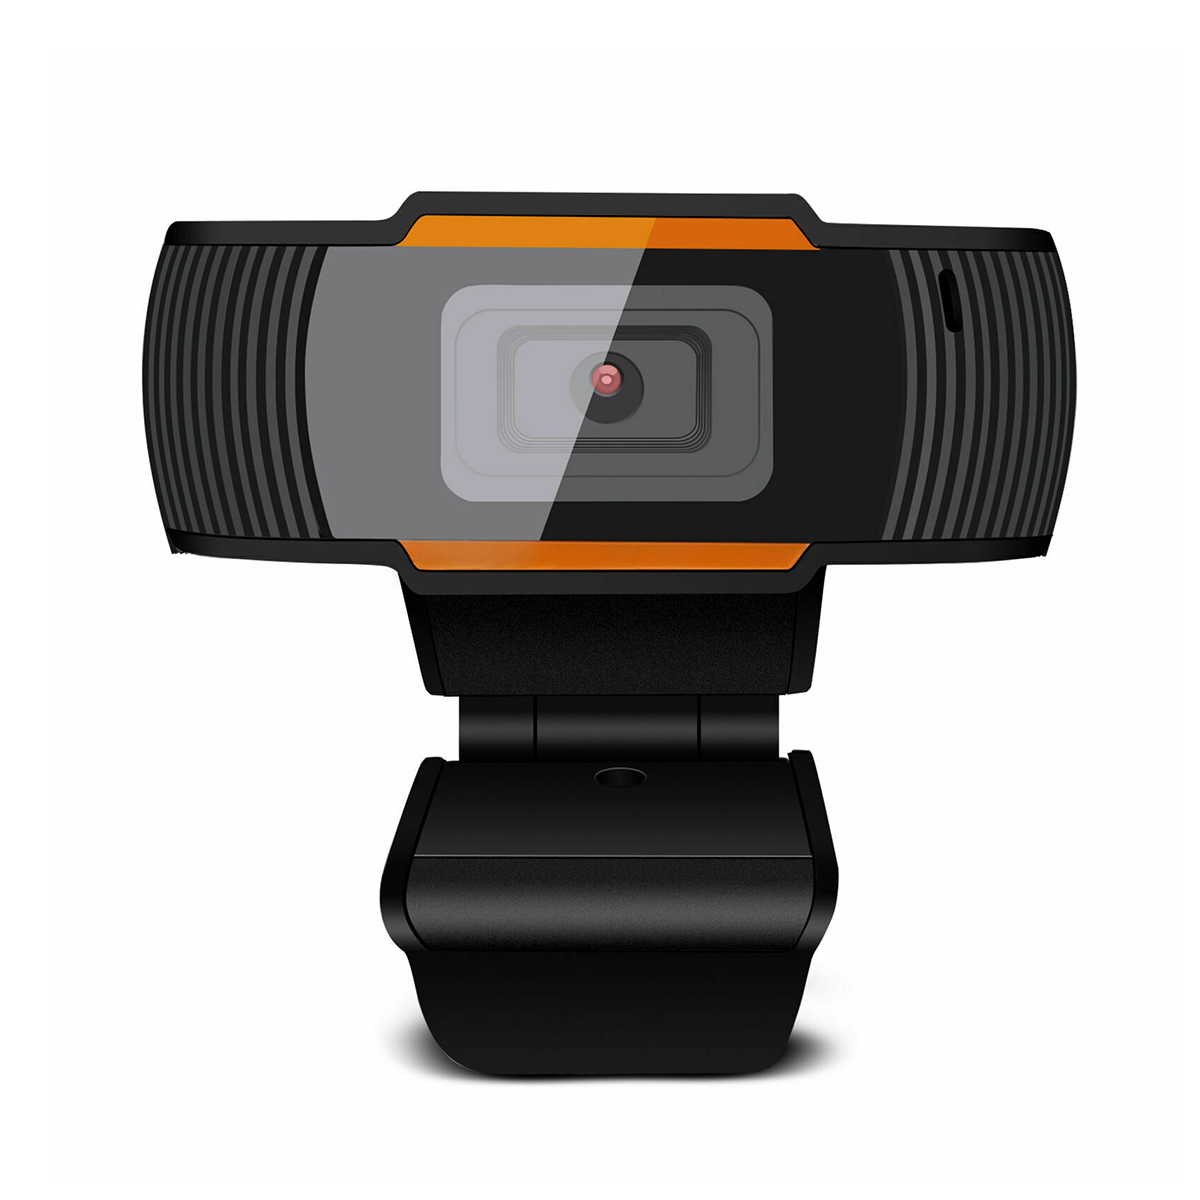 HD-Webcam-Auto-Focusing-Web-USB-20-Camera-With-Microphone-For-Laptop-Desktop-1780567-11